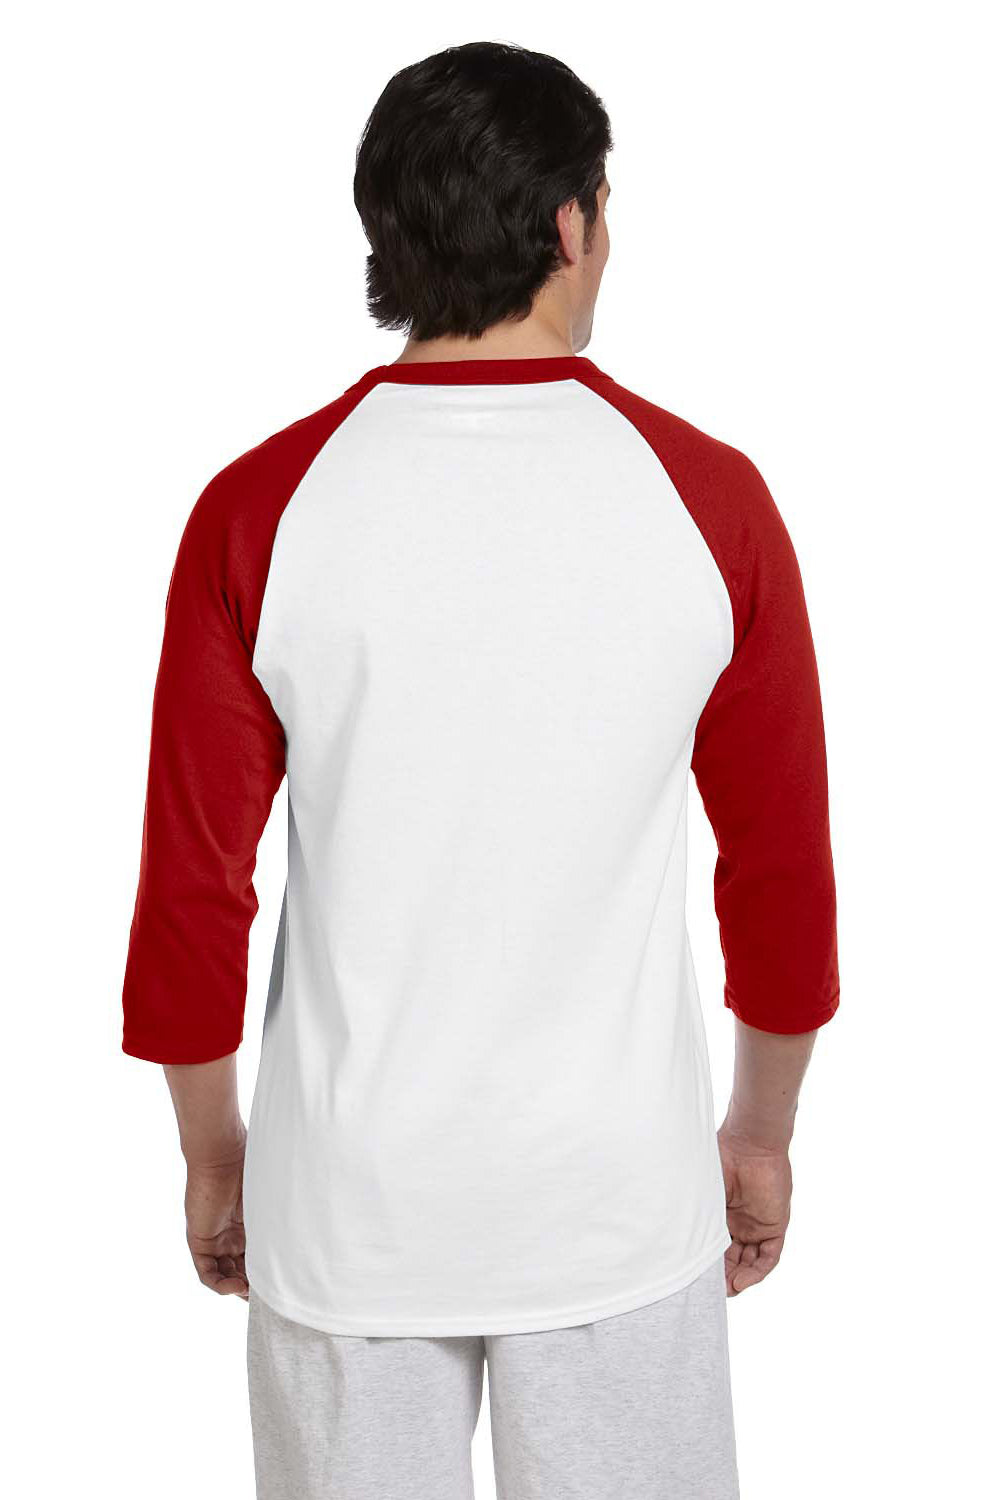 Champion T1397 Mens 3/4 Sleeve Crewneck T-Shirt White/Red Back